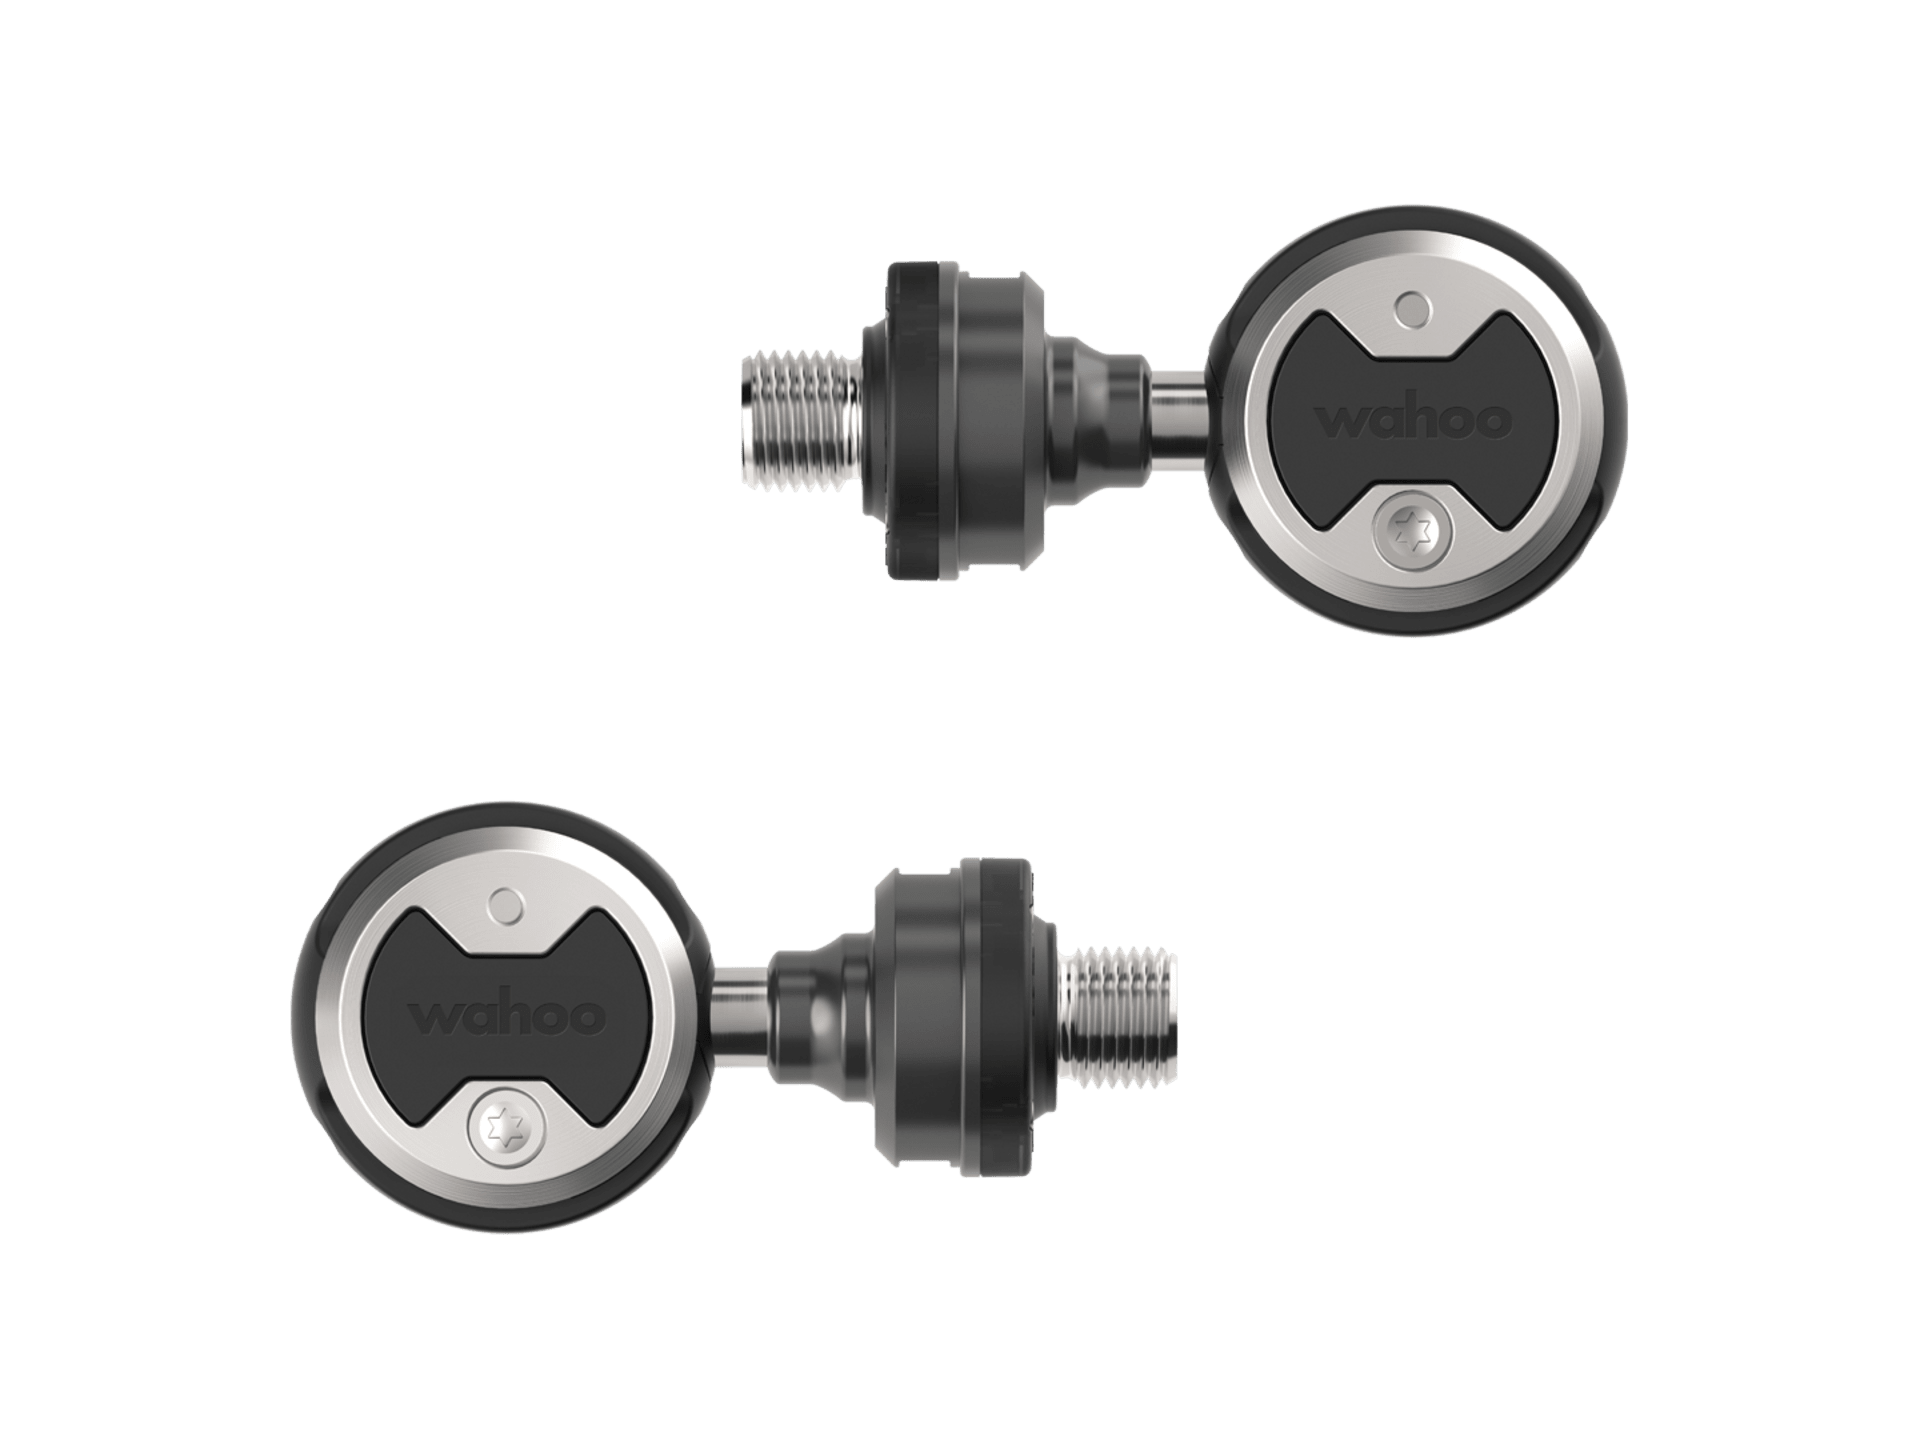 Wahoo POWRLINK ZERO Dual-Sided Power Pedals